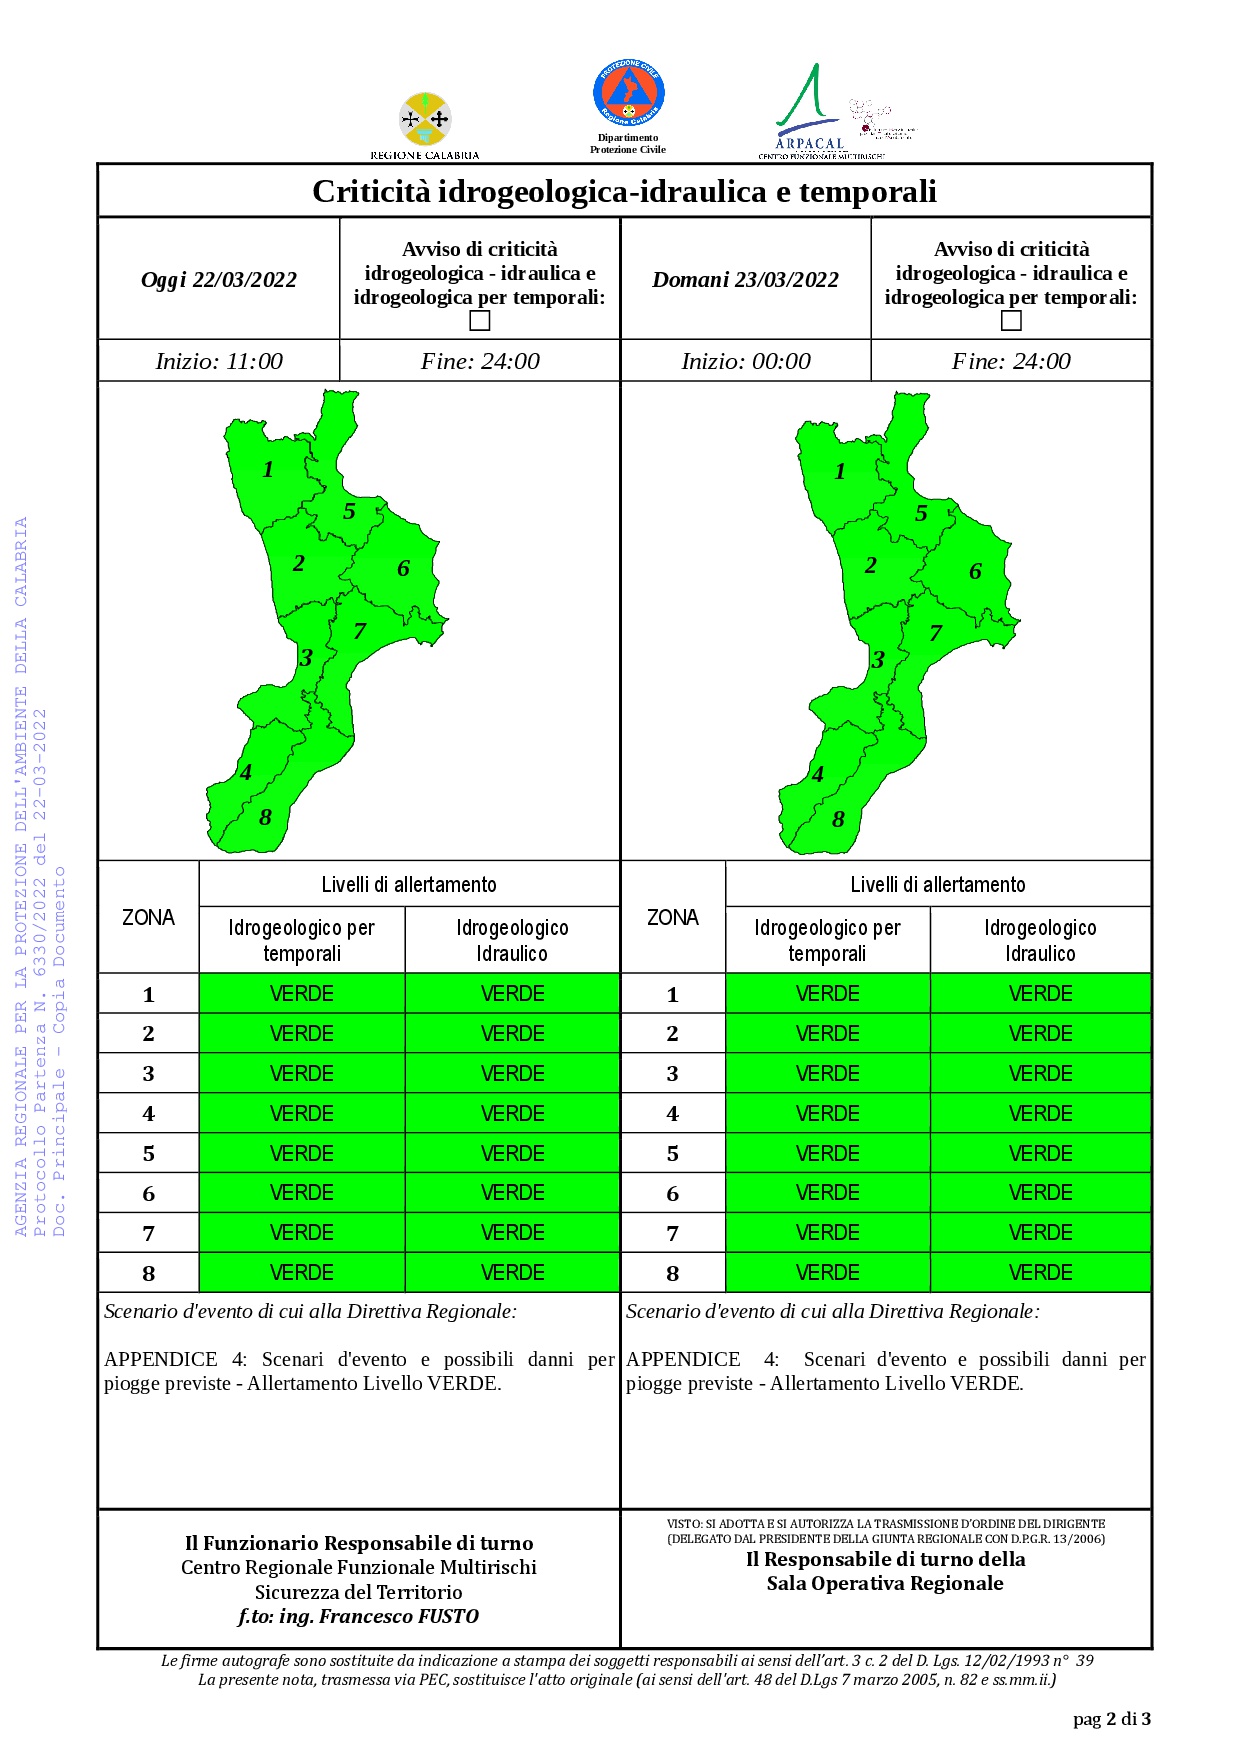 Criticità idrogeologica-idraulica e temporali in Calabria 22-03-2022